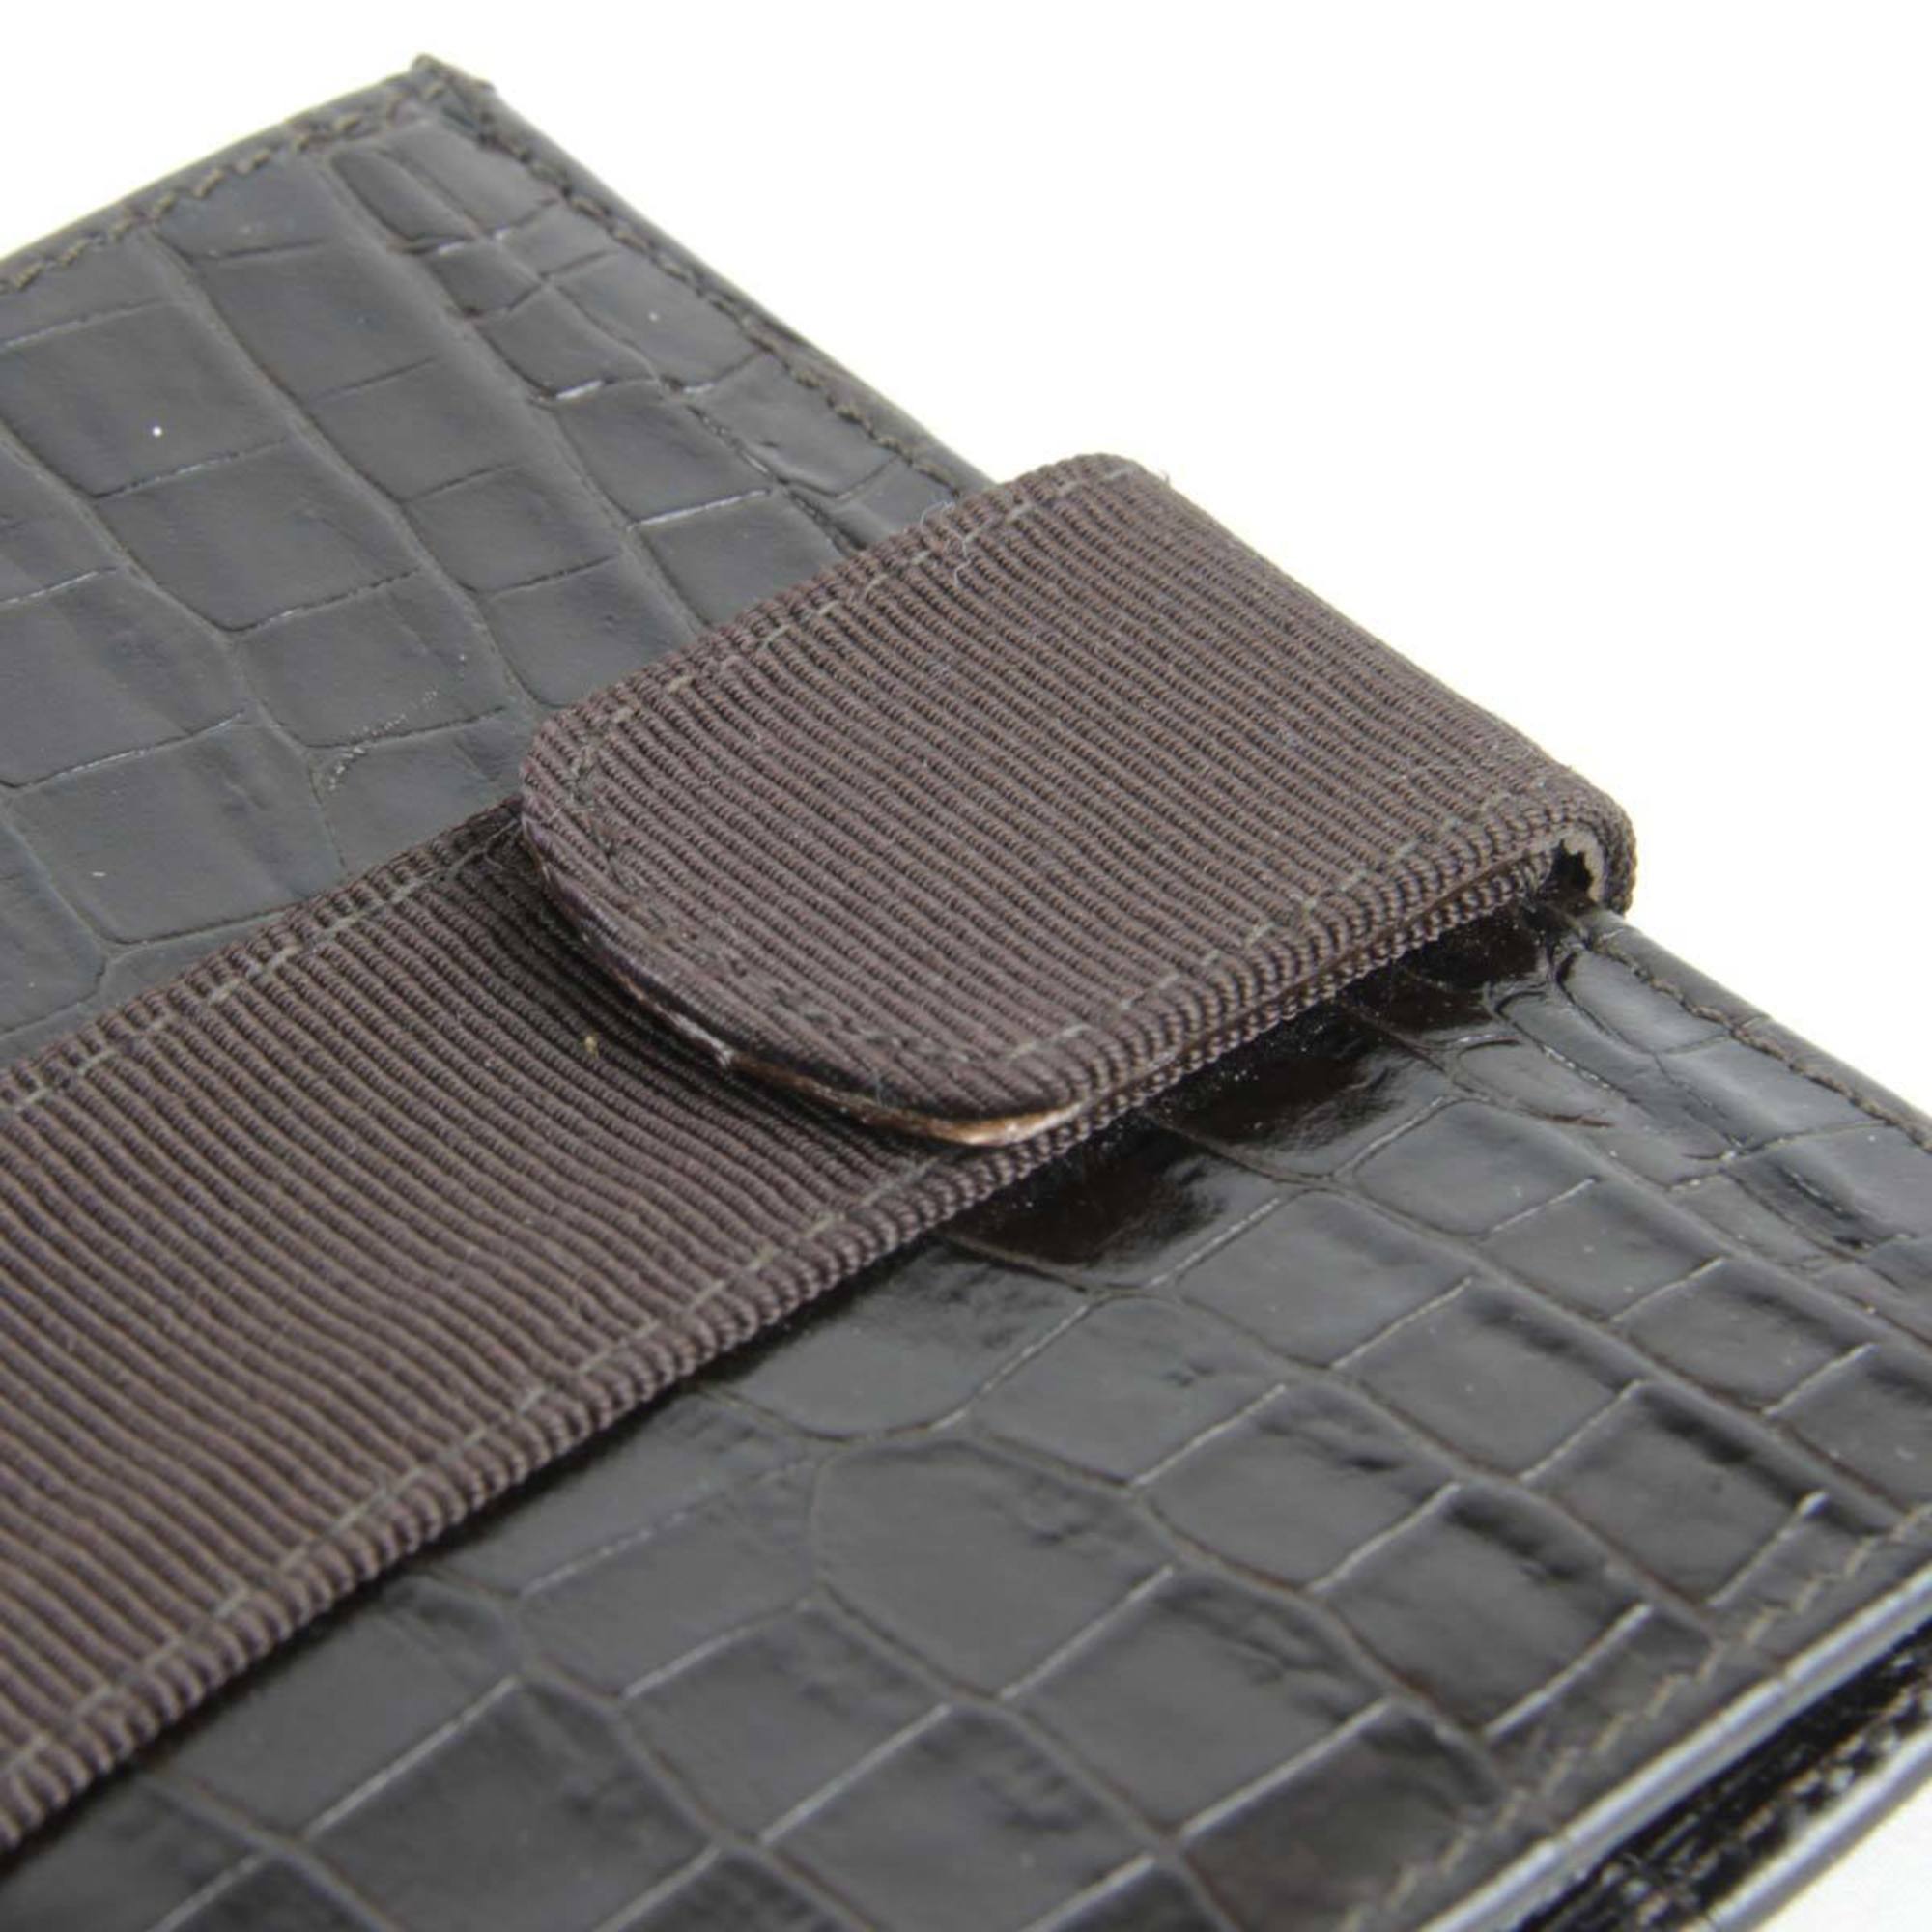 Salvatore Ferragamo 223053 Bi-fold wallet Leather Brown Women's